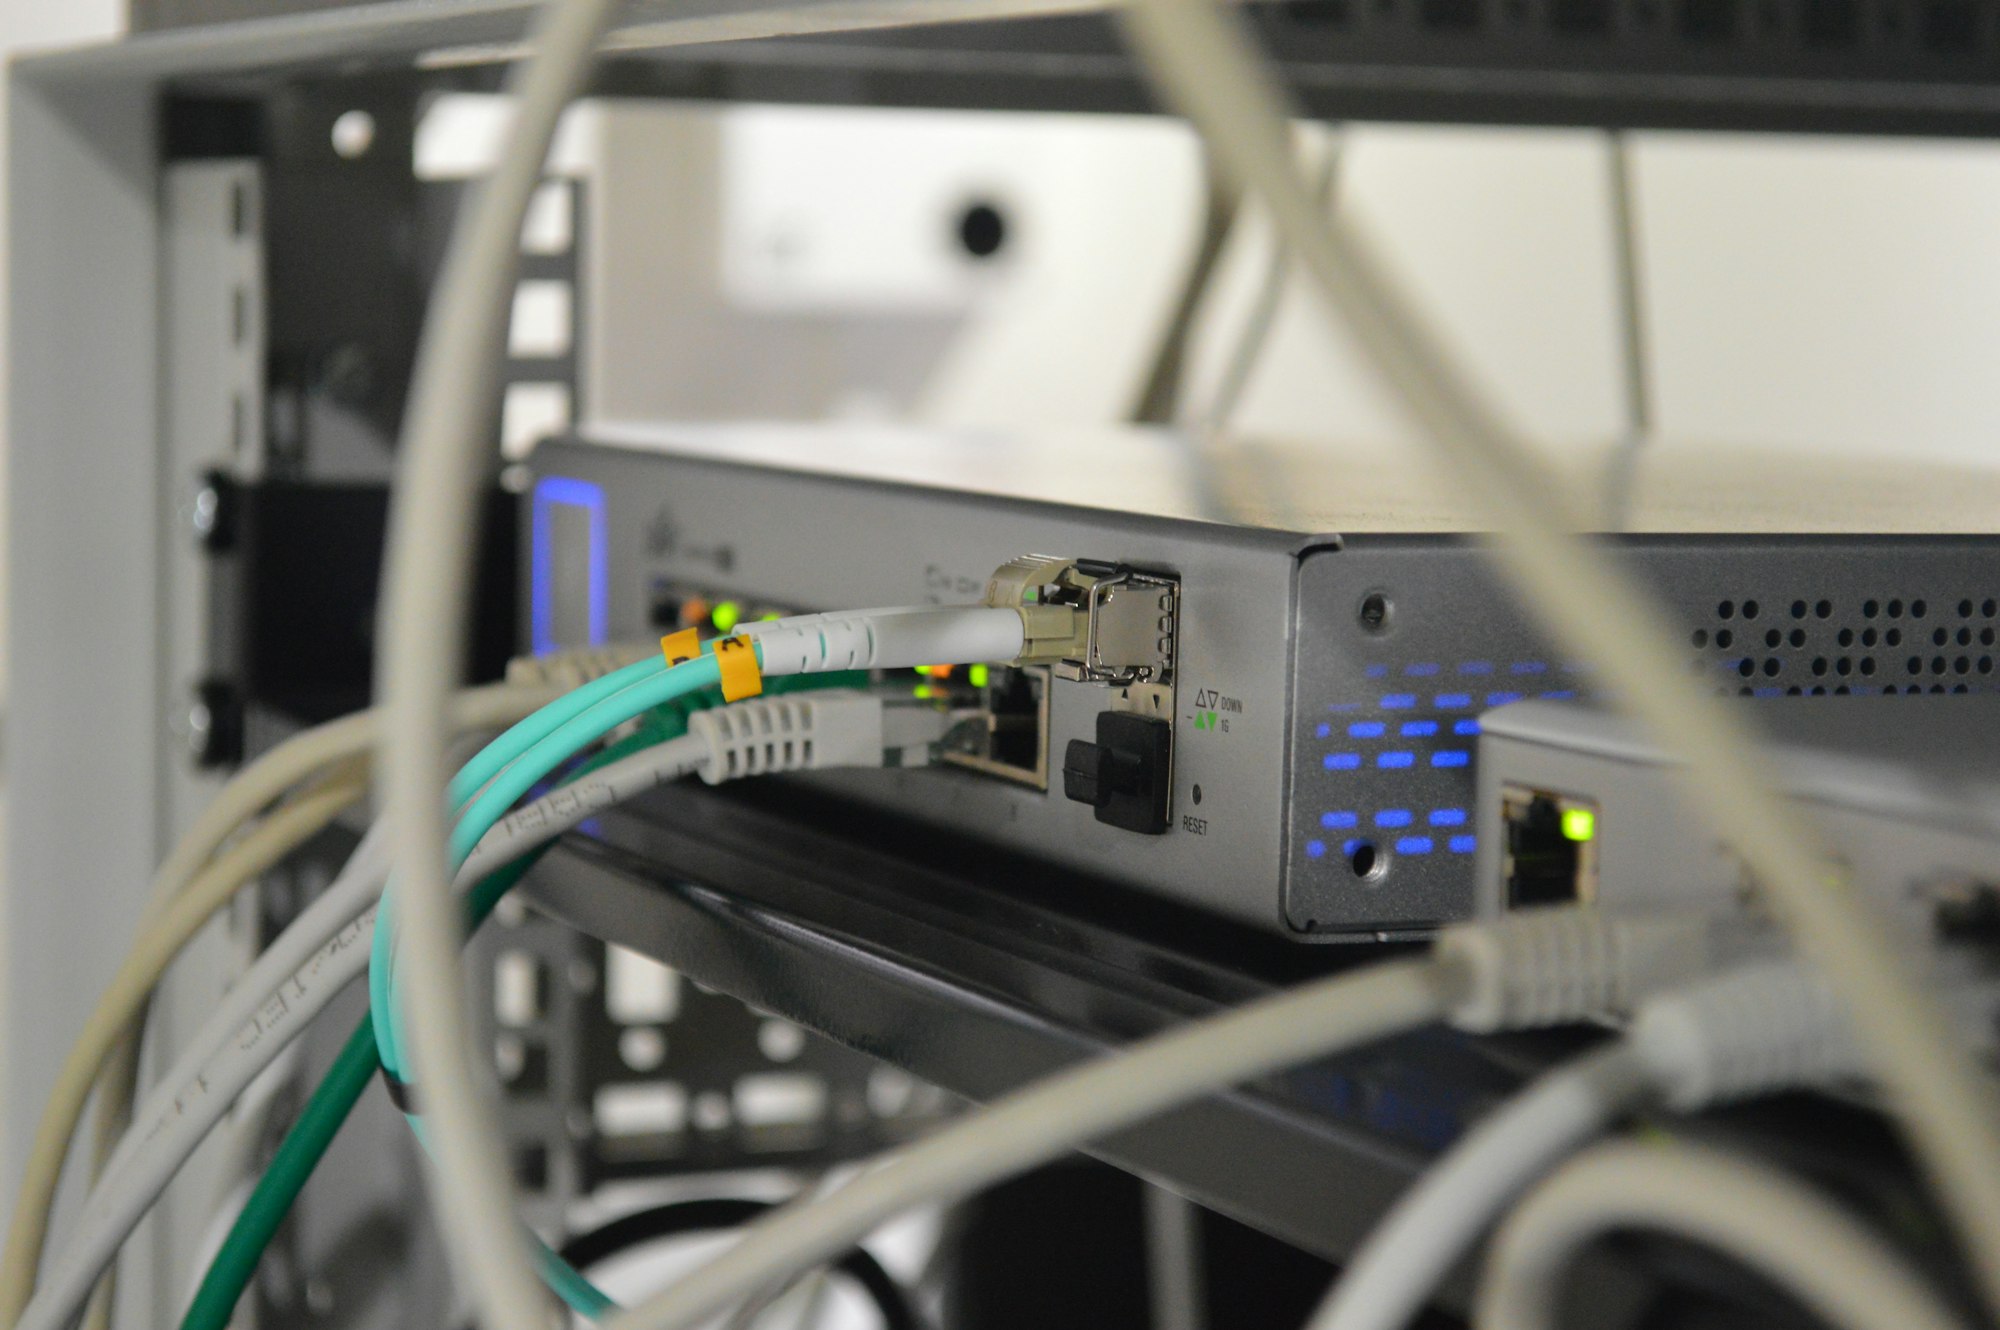 Minimizing surveillance over broadband networks